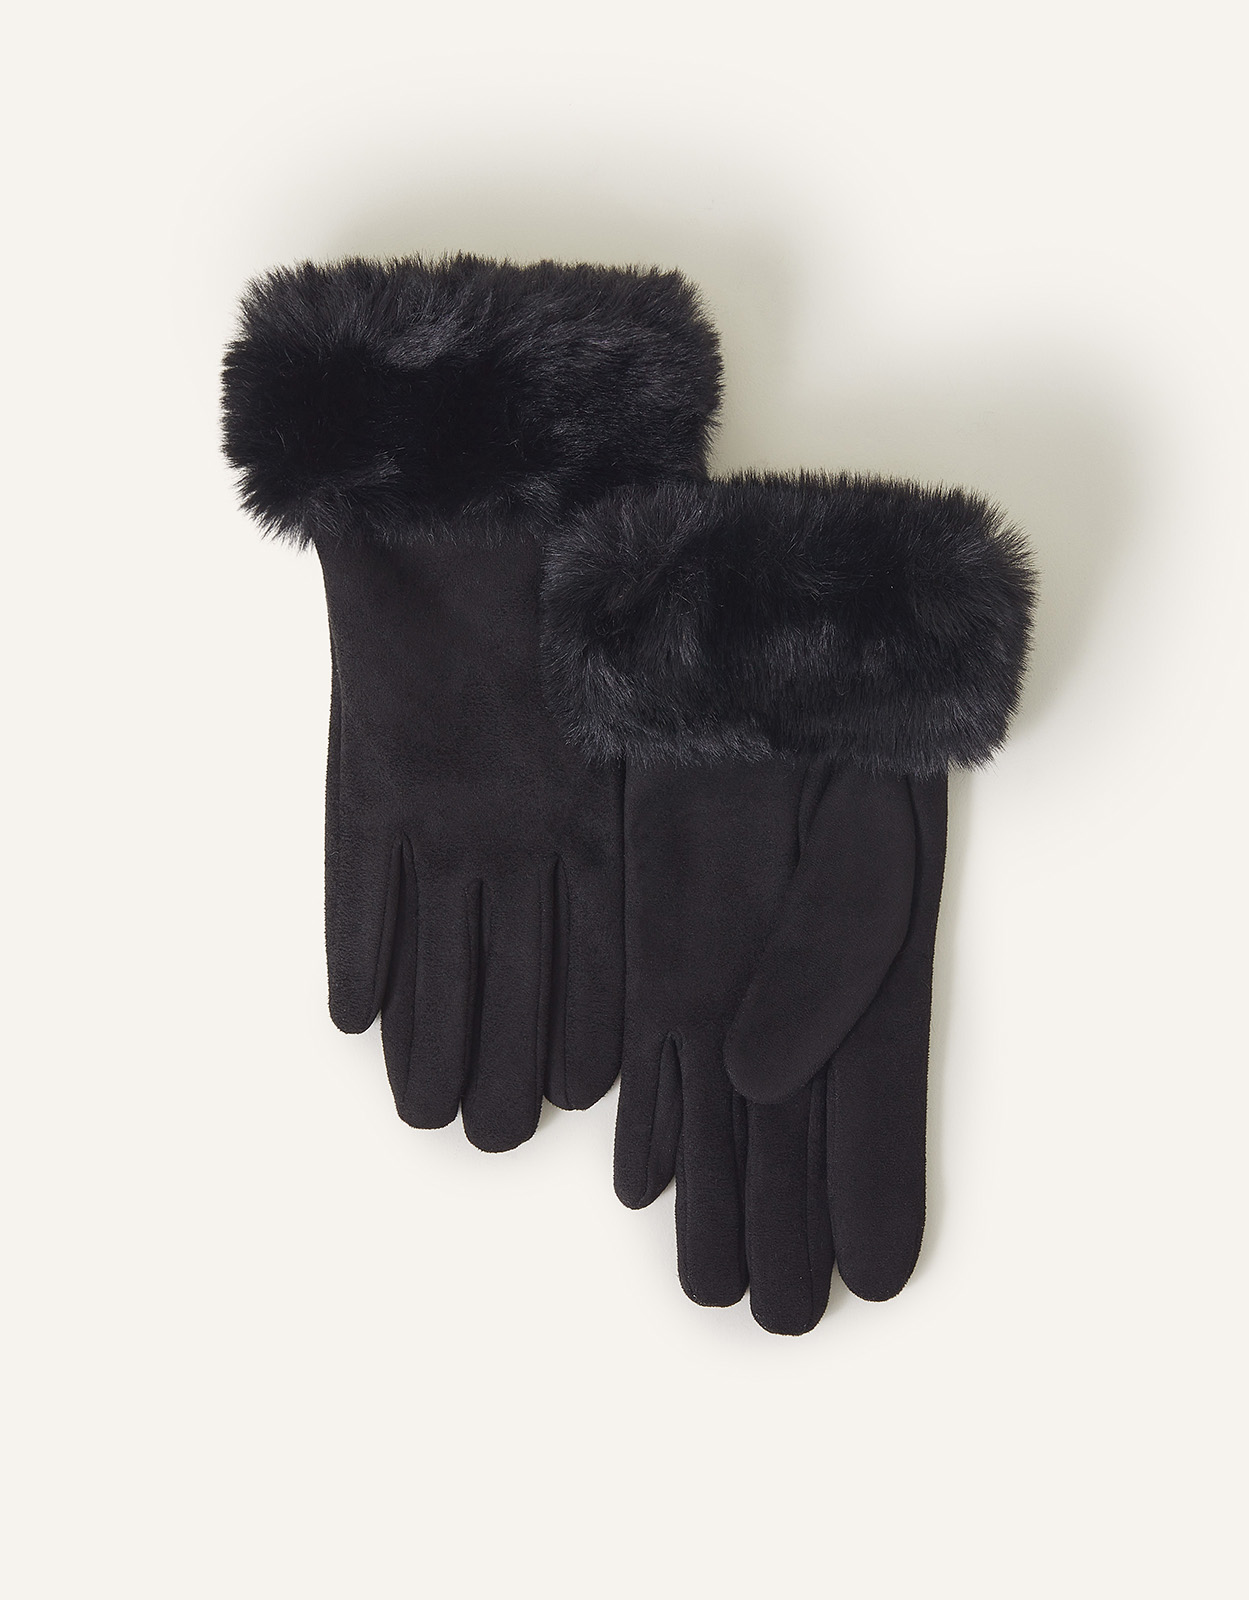 Accessorize Suedette Faux Fur Cuff Gloves Black